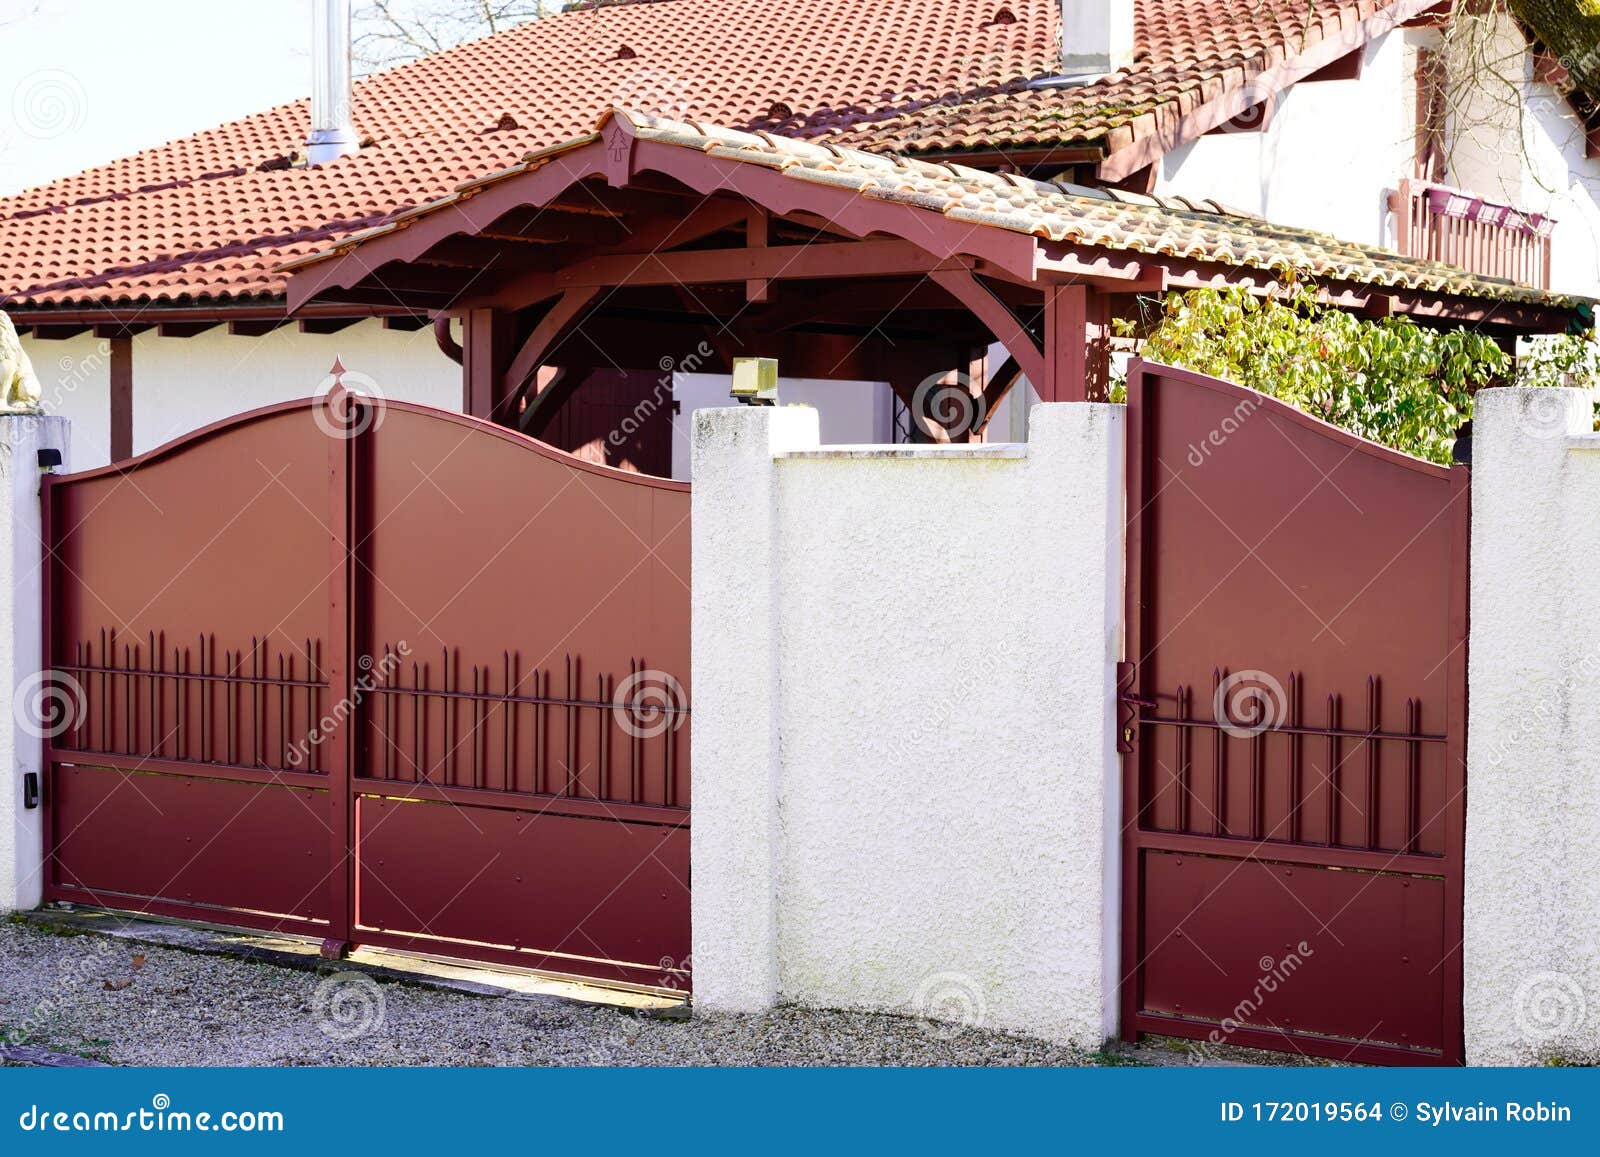 Aluminum Gate of a House Red Design Metal Garden Access Home Stock ...